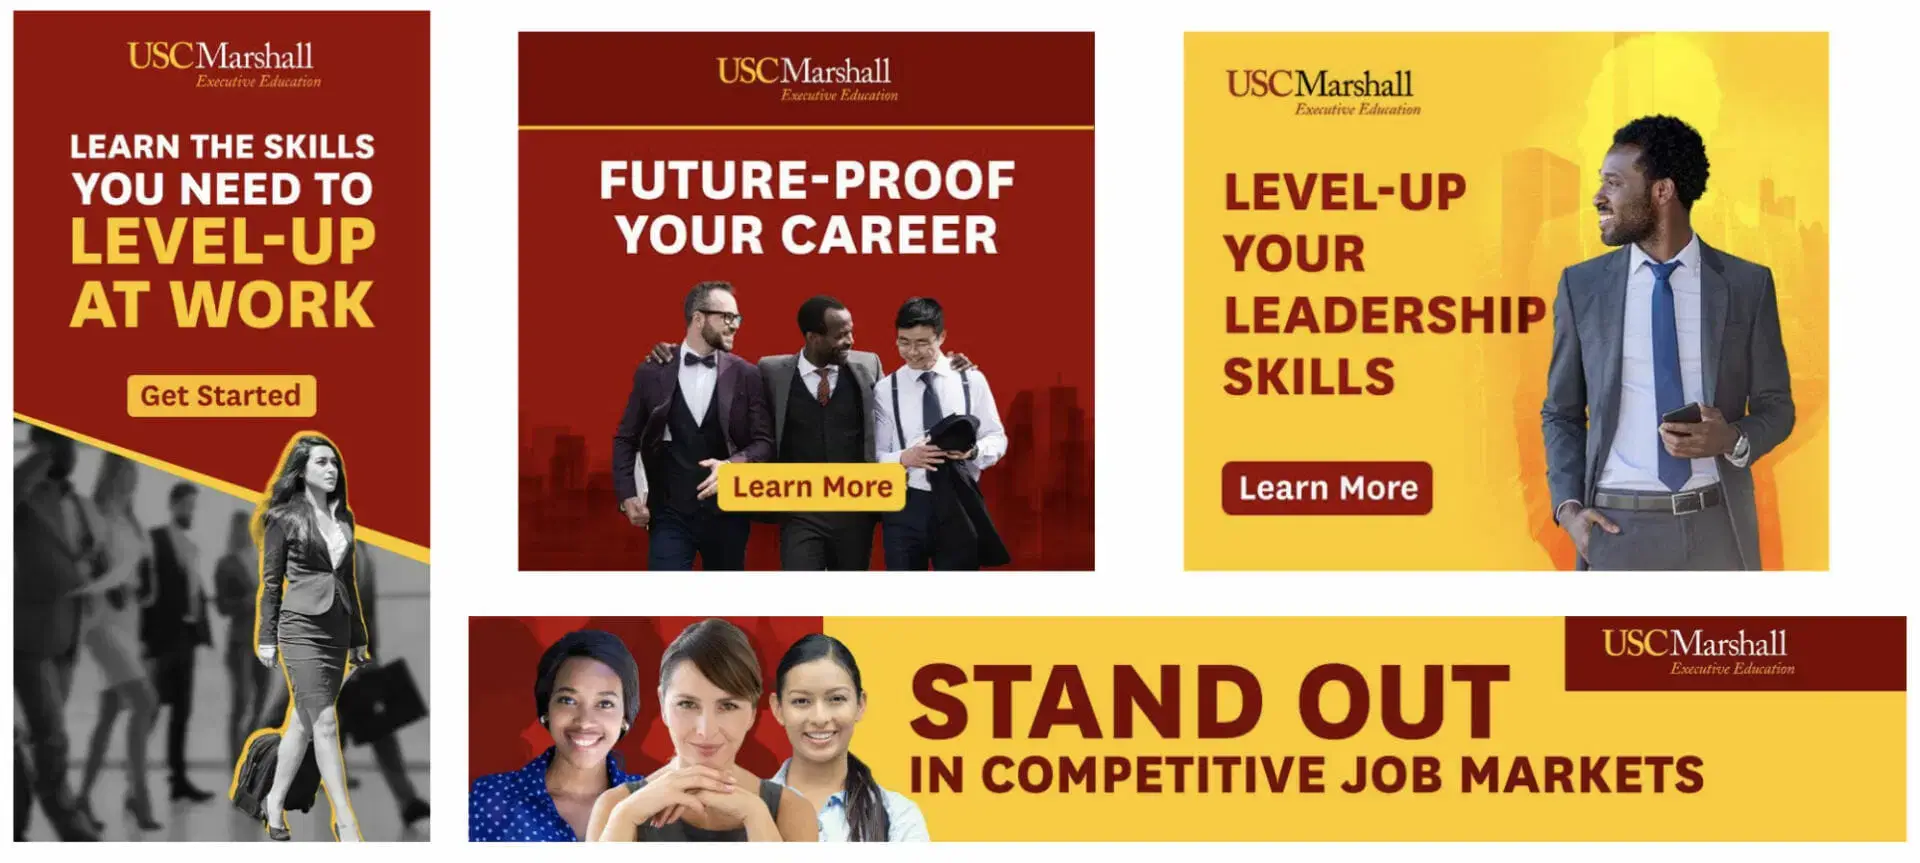 USC Marshall digital marketing